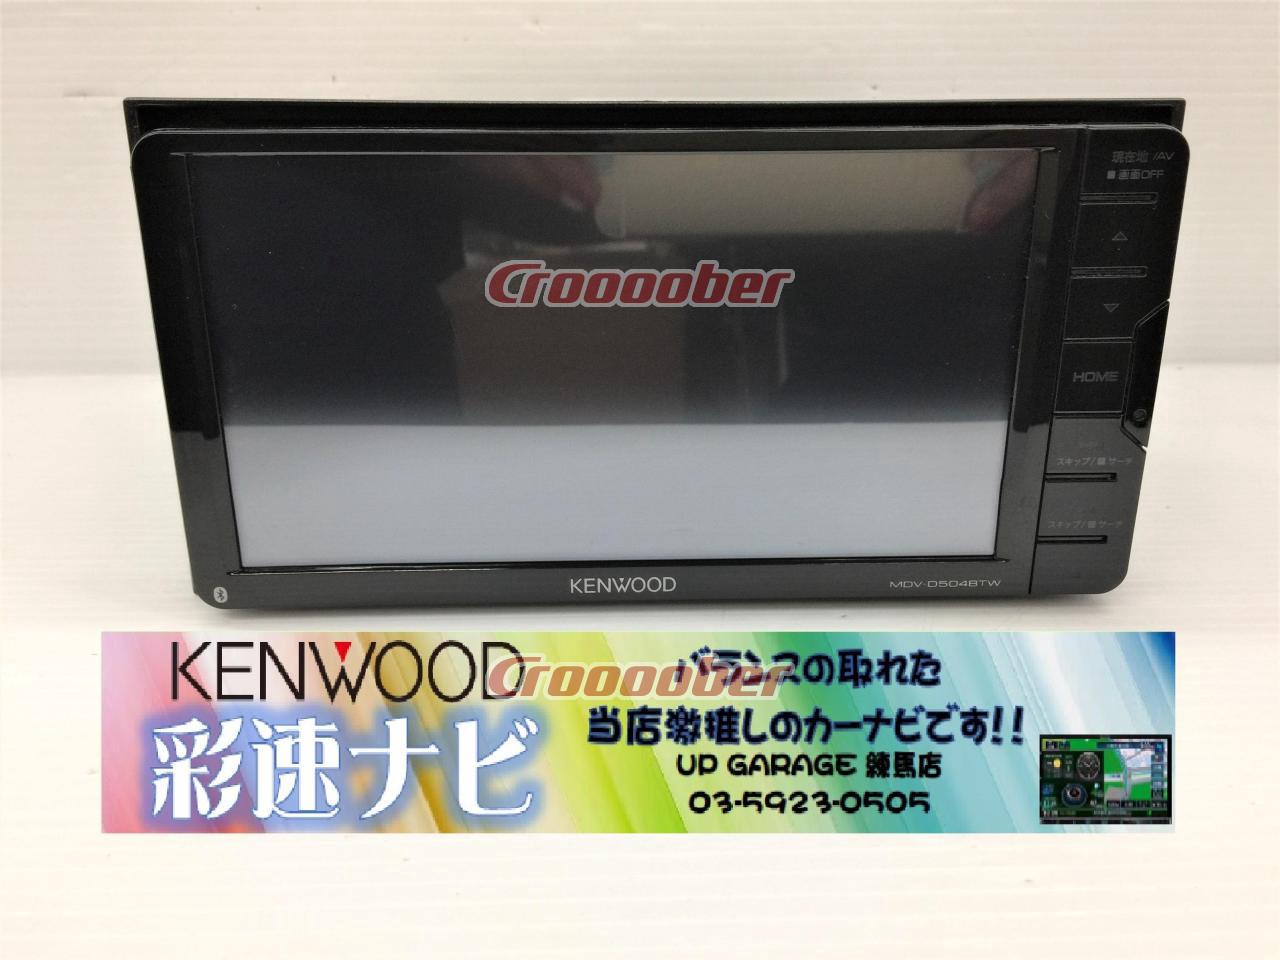 KENWOOD MDV-D504BTW Multi-language Compatible Popular Fast Speed 